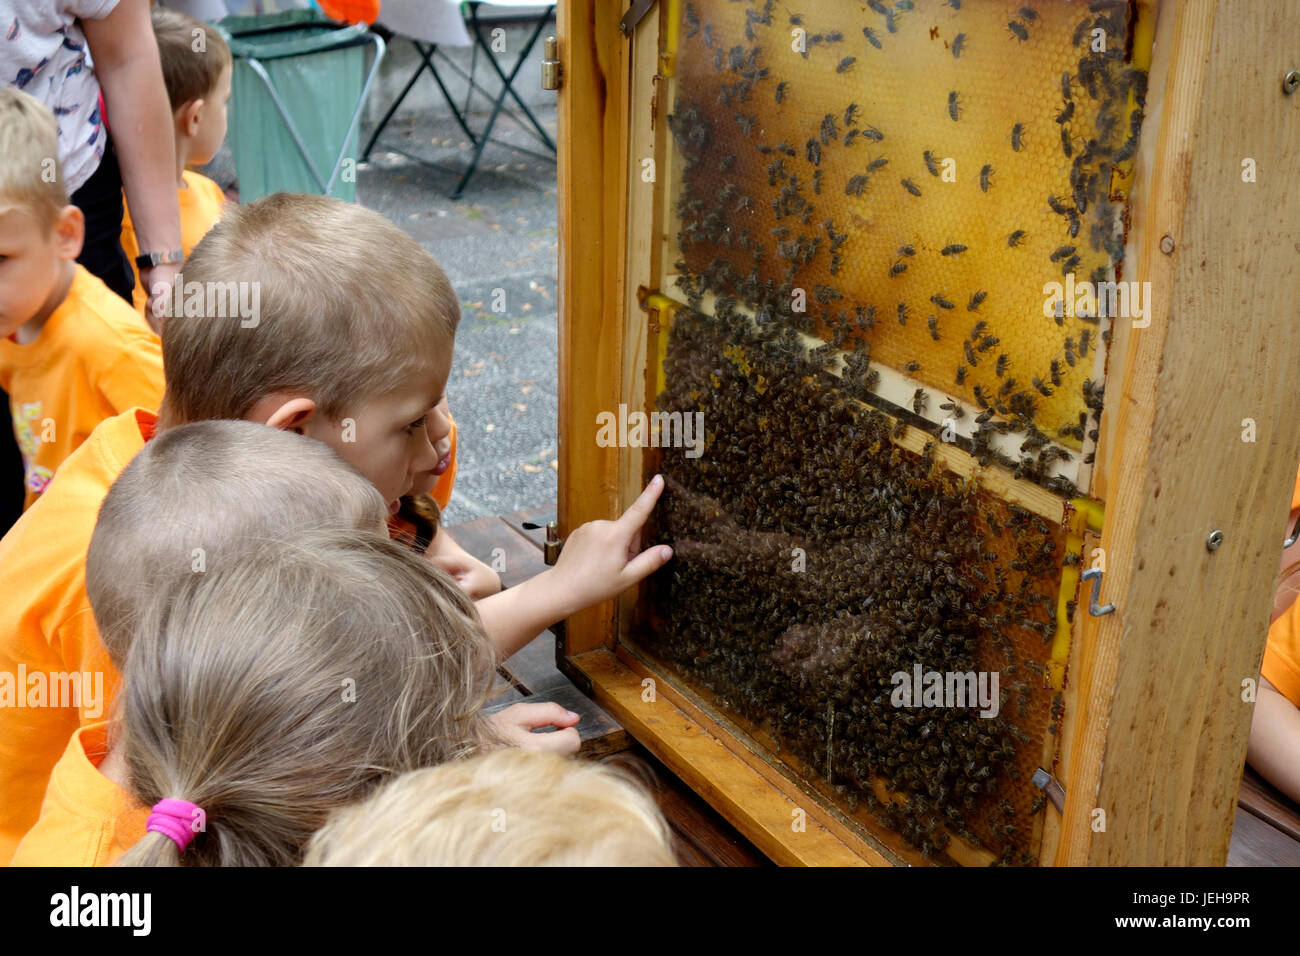 Children examine honeybees in a display case. Stock Photo